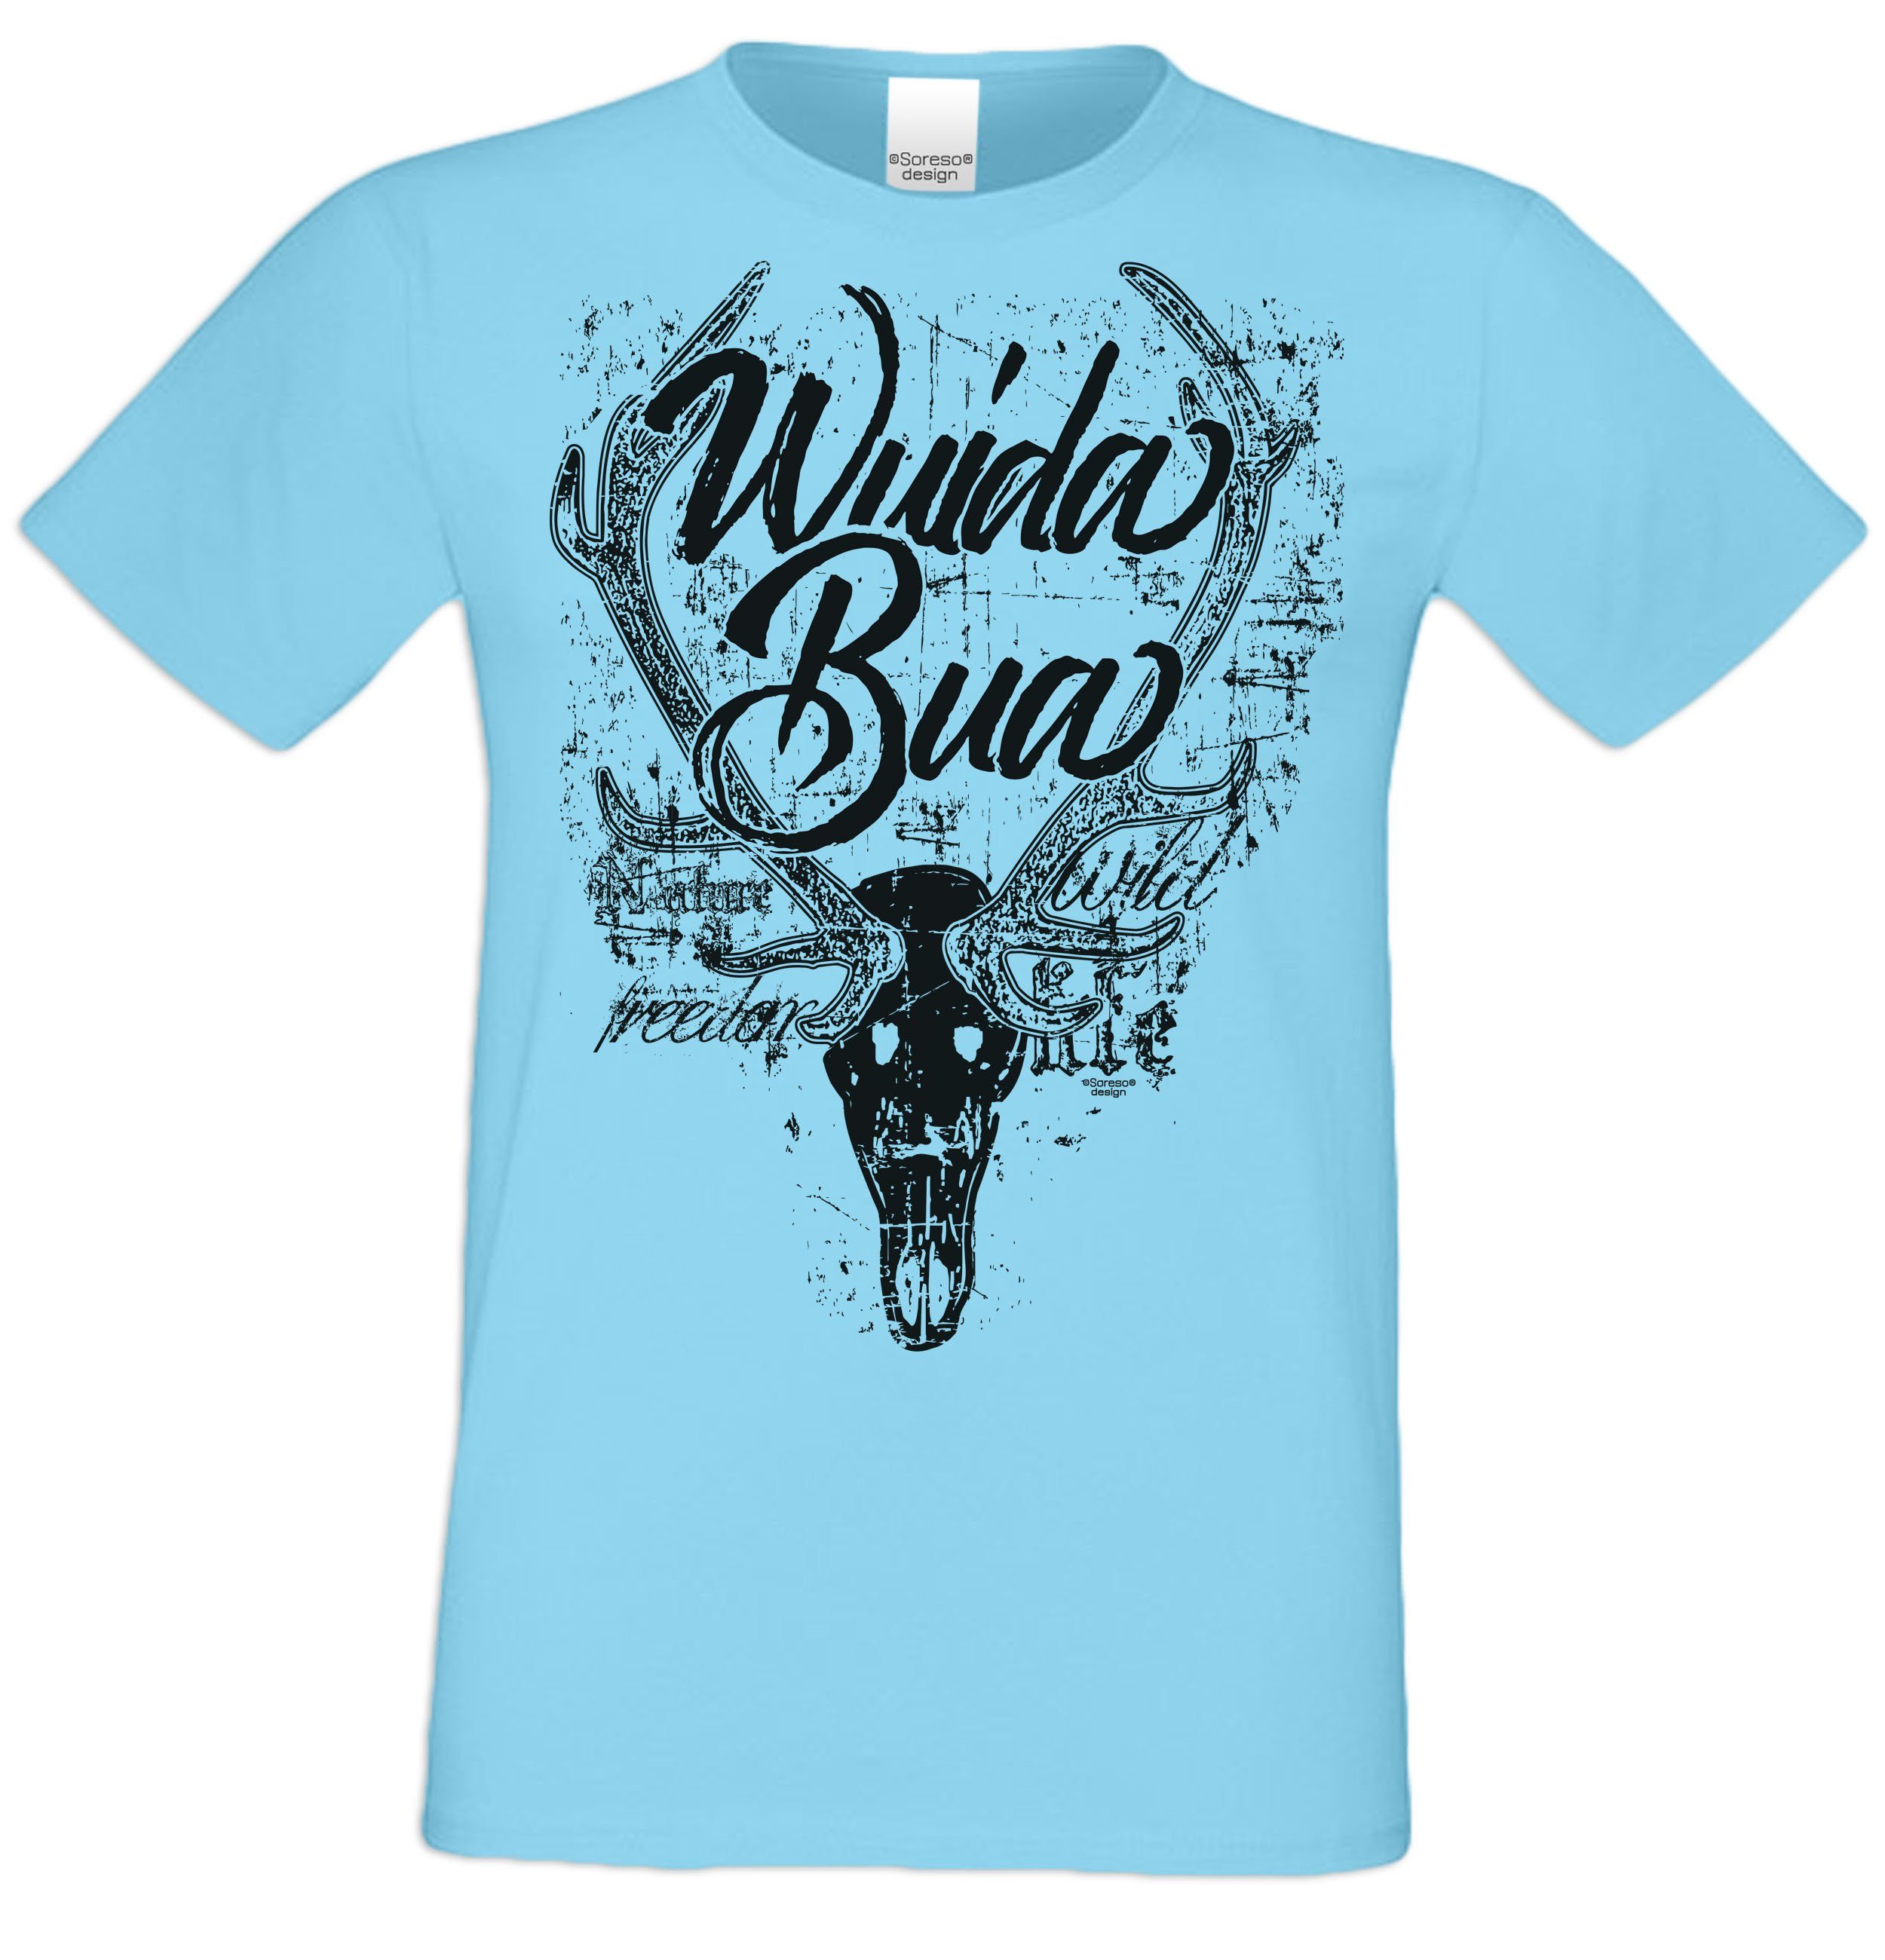 Soreso® T-Shirt Trachten Herren (Ein Bua T-Shirt) T-Shirt hellblau Männer Wuida Trachtenshirt